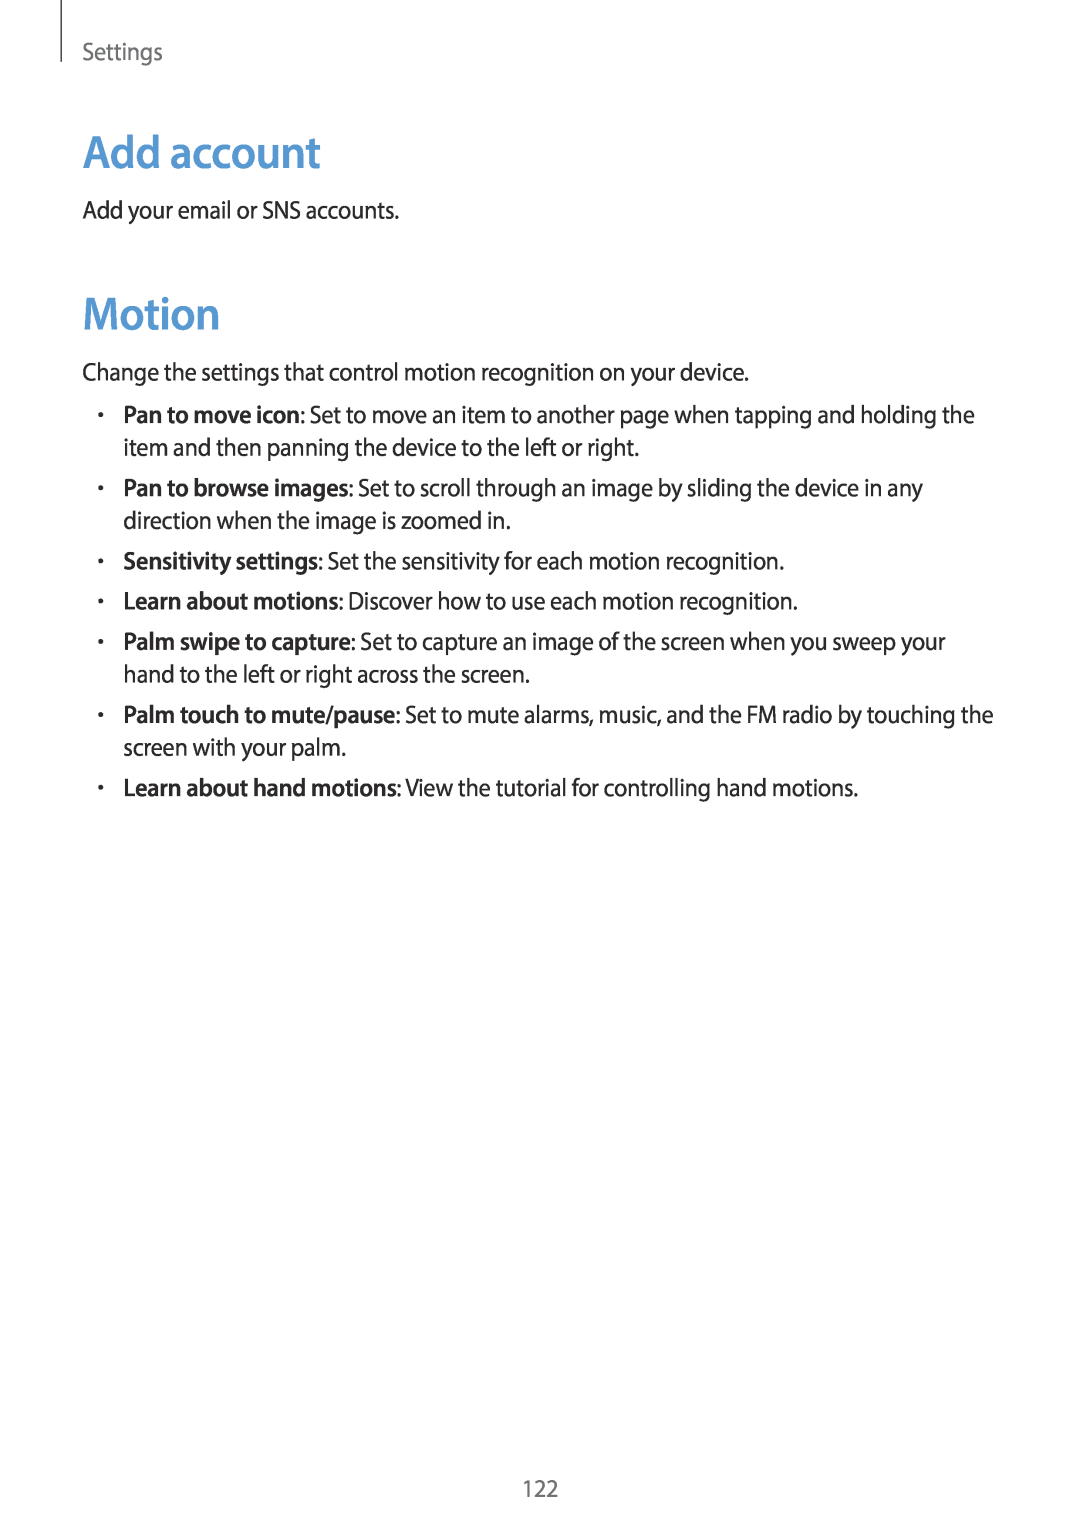 Samsung EK-GC100 user manual Add account, Motion, Settings 